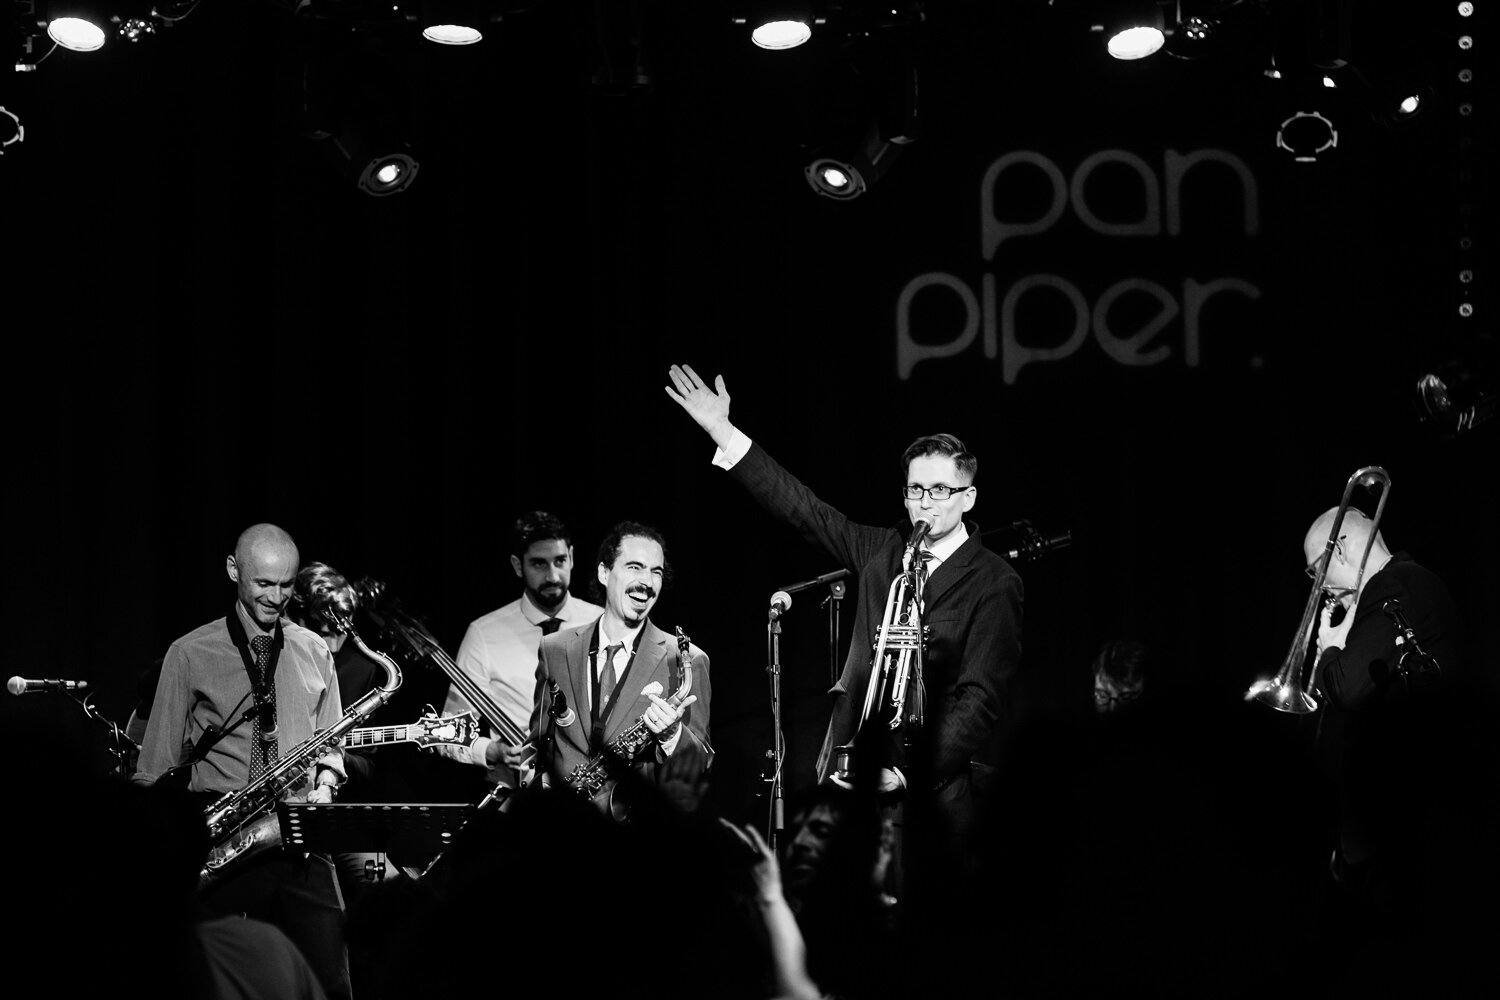  Harlem Night #7 au Pan Piper, https://jazzy-feet.com - Photo: www.fb.me/photosForDancersOnly - http://www.ebobrie.com/harlem-night-7 